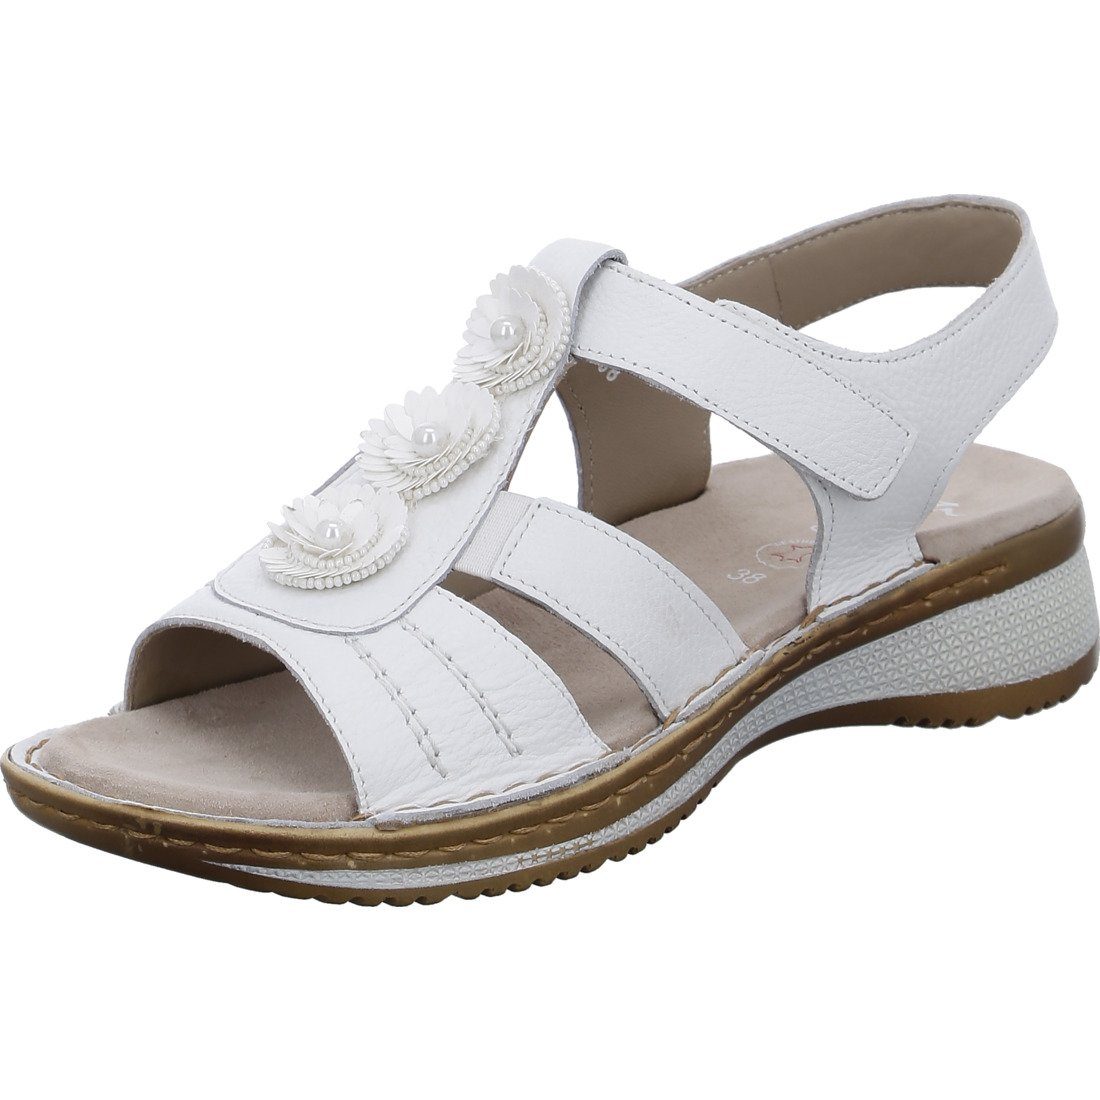 Ara Ara Schuhe, Sandalette Hawaii - Glattleder Sandalette weiß 048063 | Sandaletten